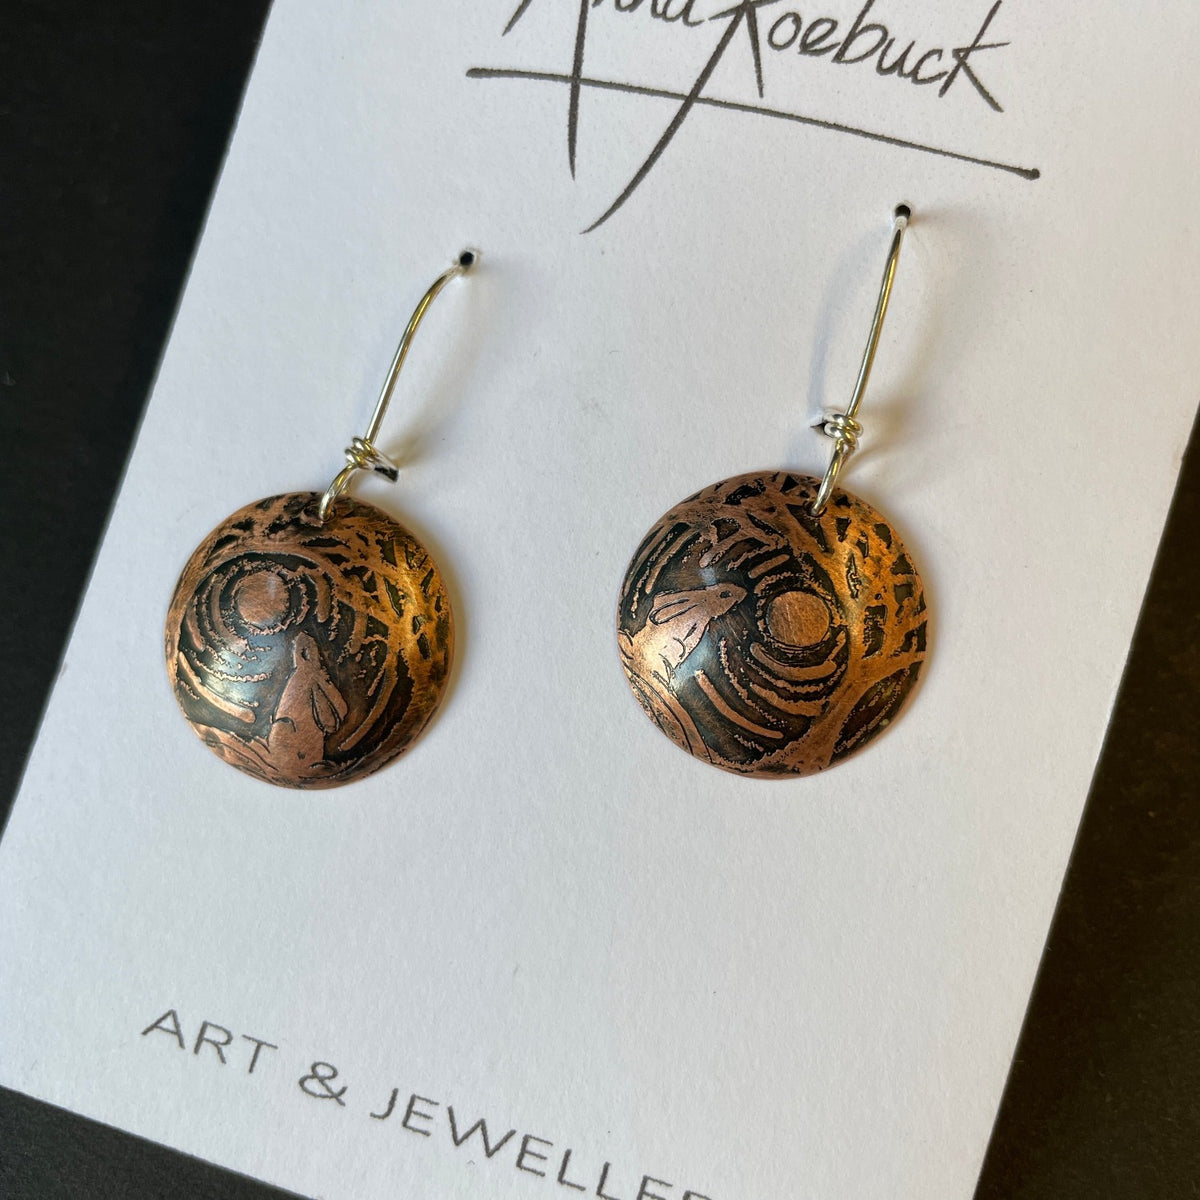 Moongazing copper earrings by Anna Roebuck